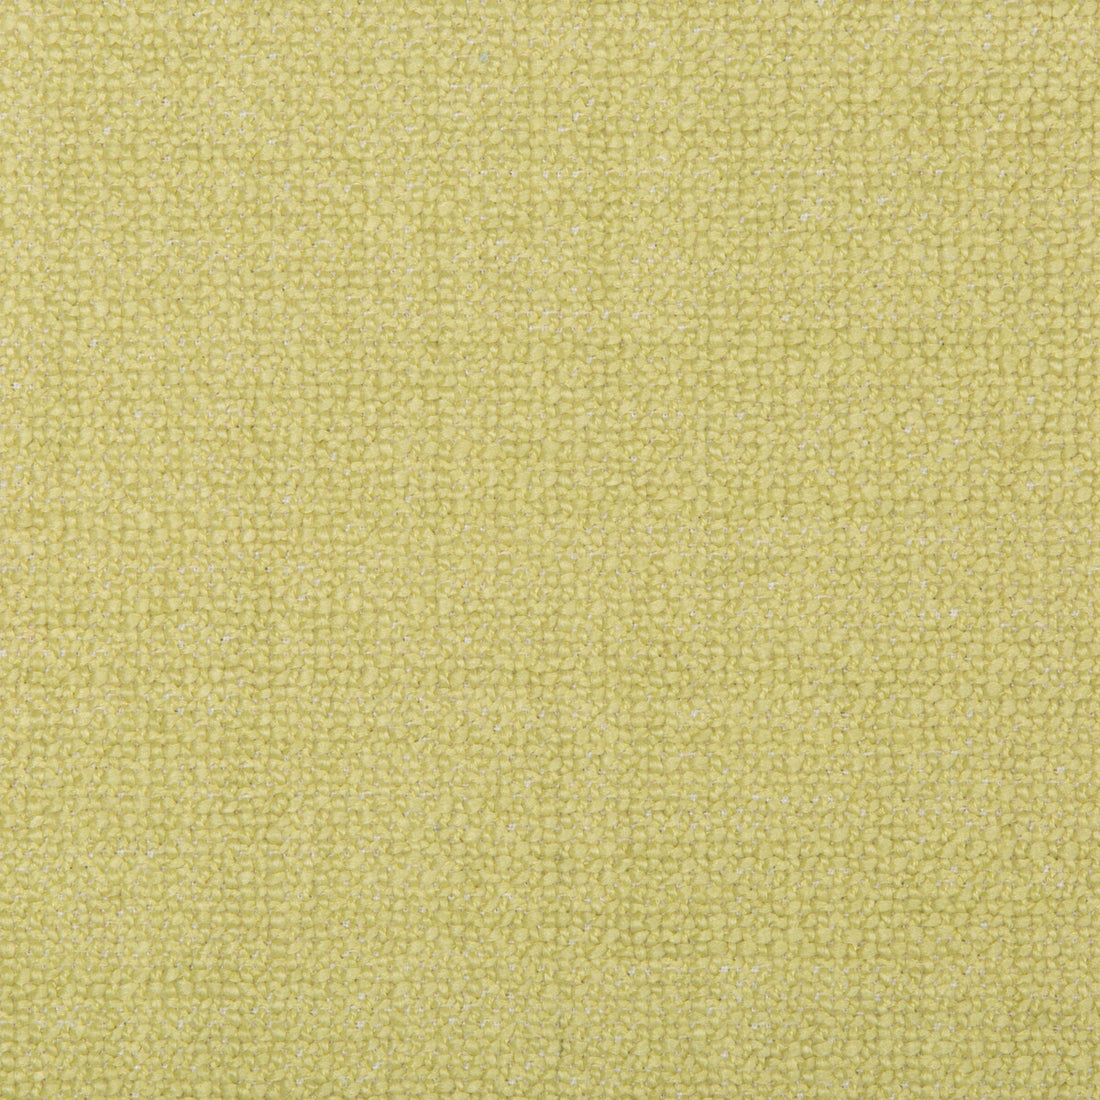 Kravet Smart fabric in 35379-123 color - pattern 35379.123.0 - by Kravet Smart in the Performance Kravetarmor collection